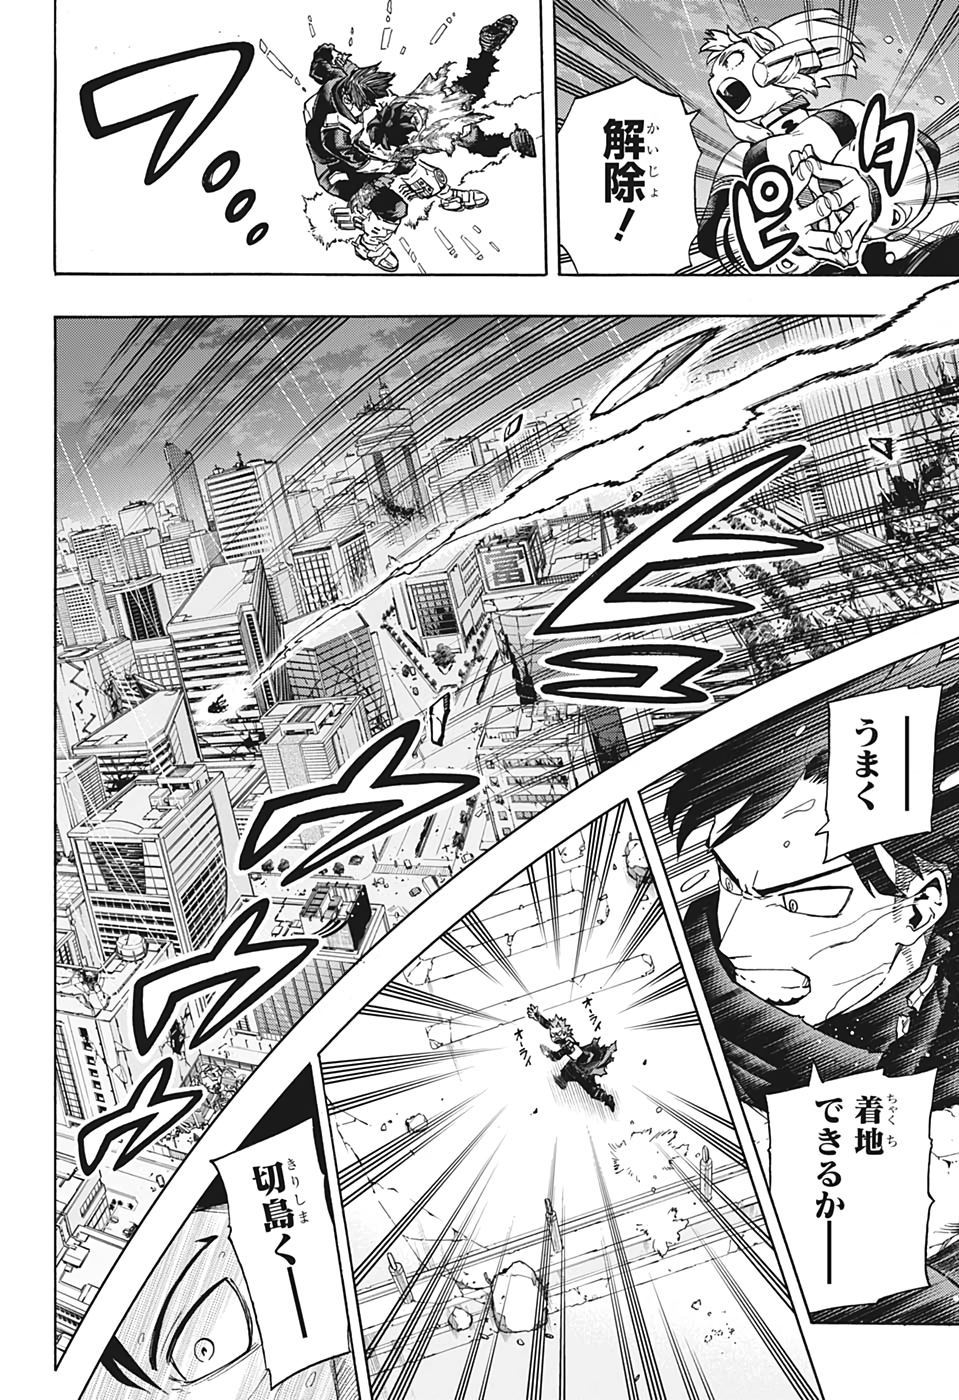 Boku no Hero Academia - Chapter 322 - Page 2